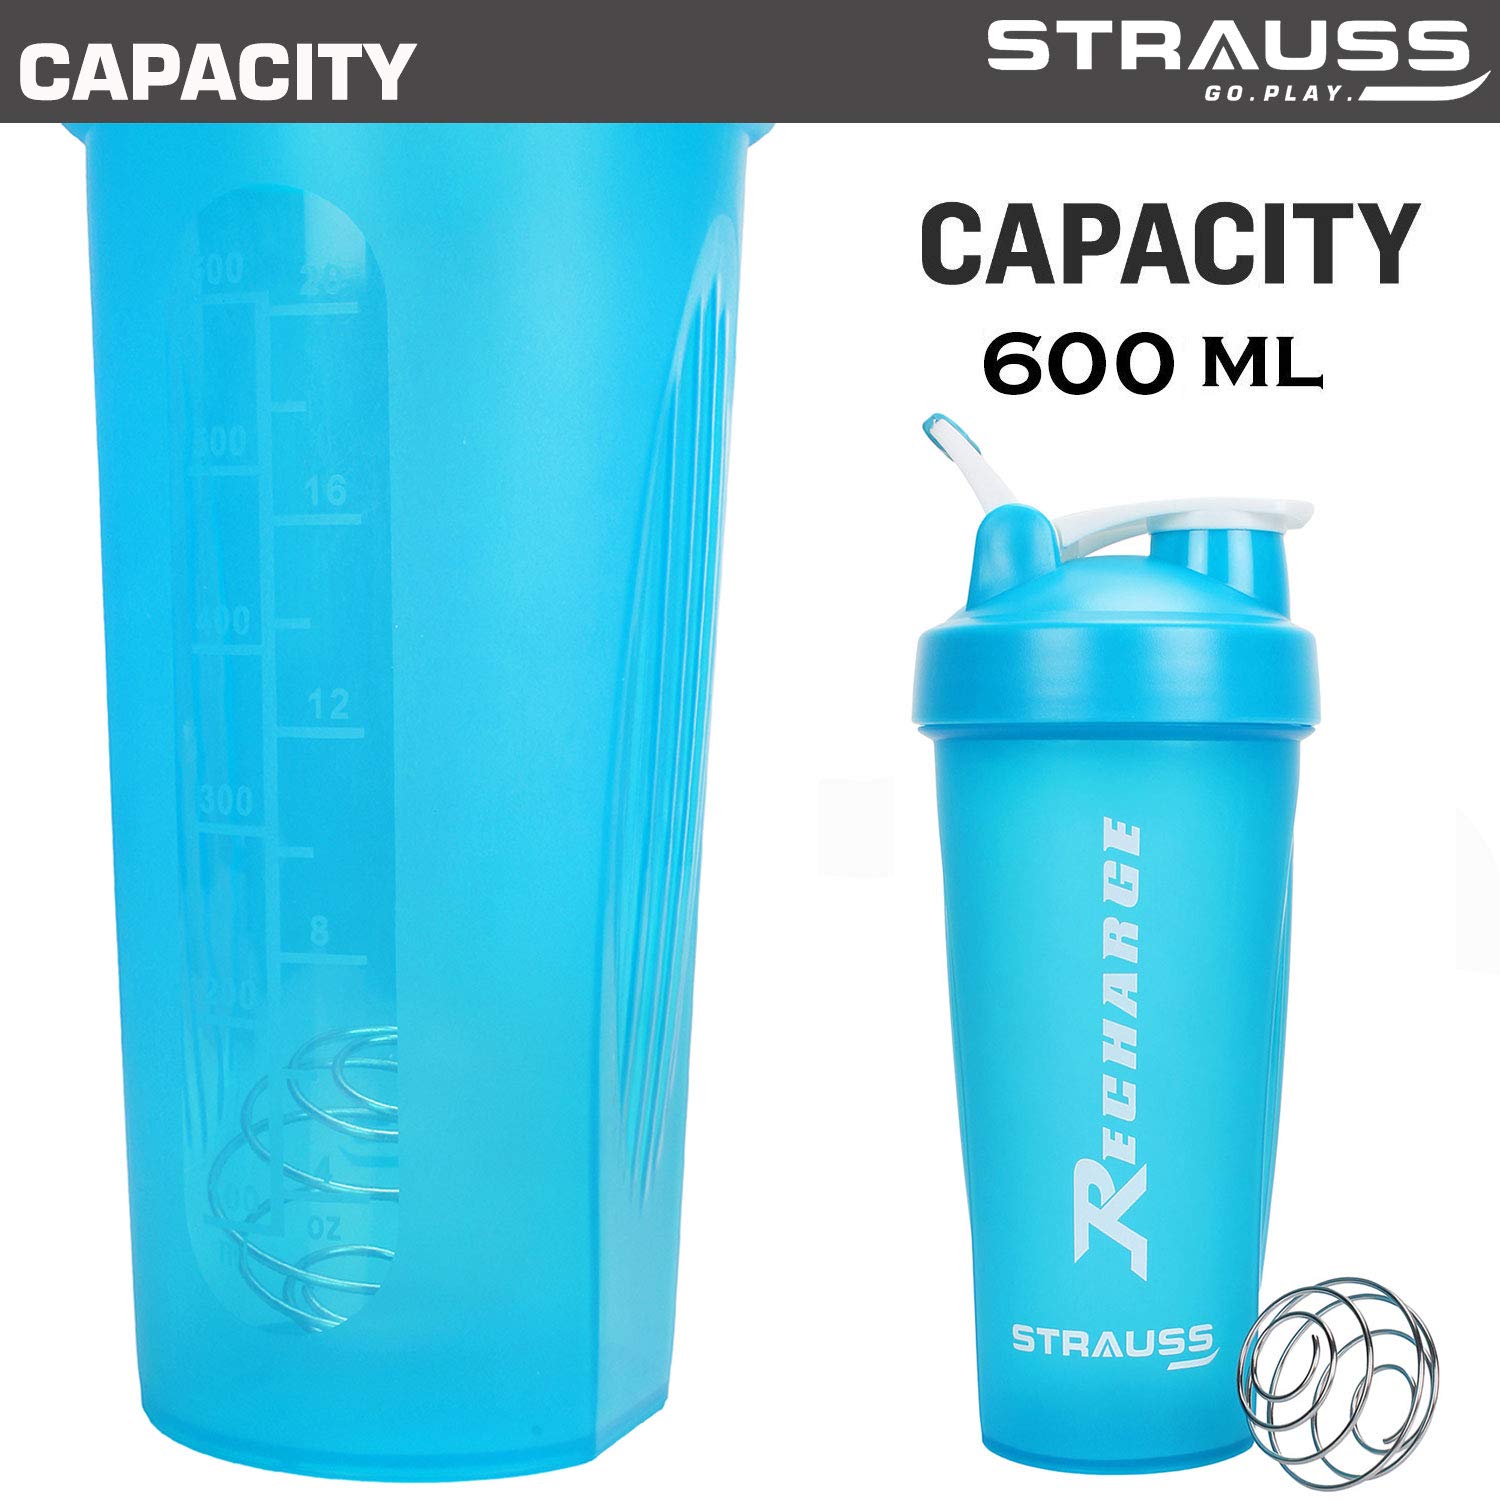 Strauss Recharge Shaker Bottle, 600 ml (Blue)